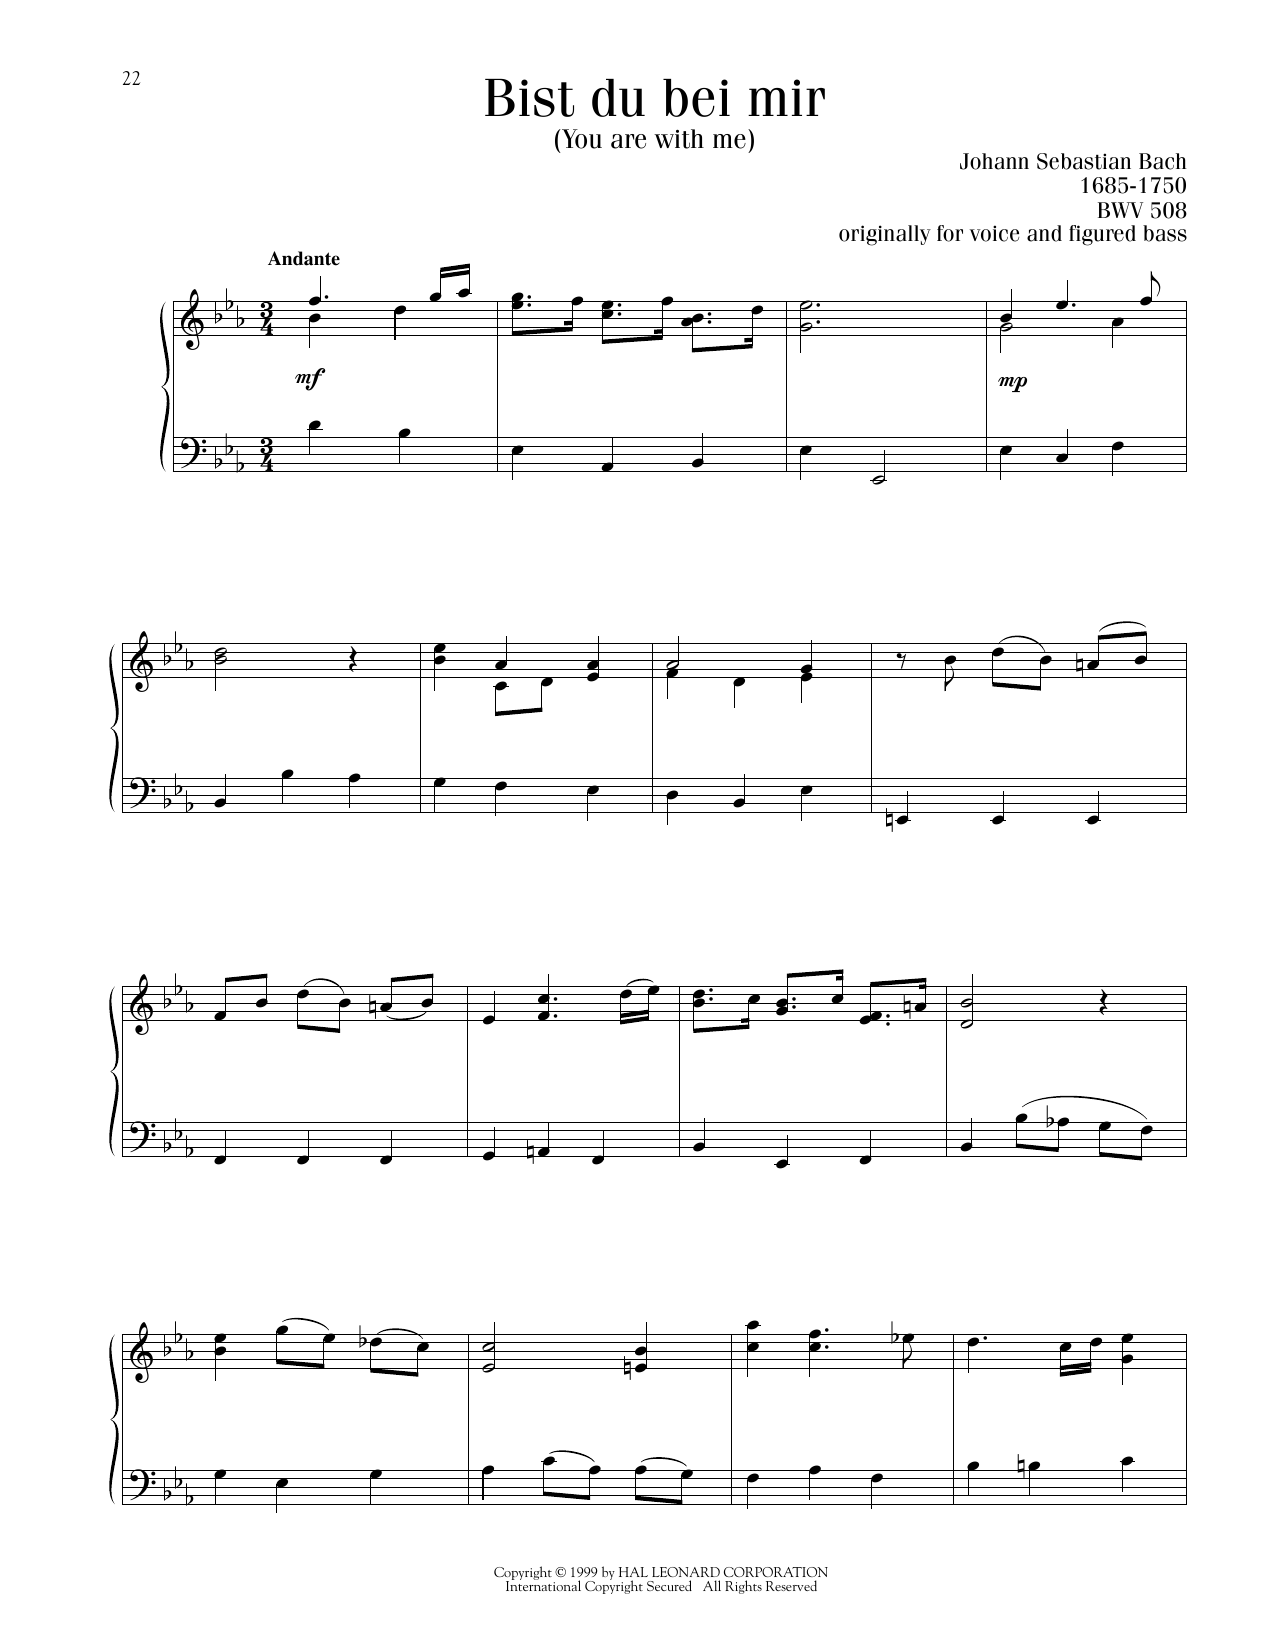 Johann Sebastian Bach Bist du bei mir (You Are With Me) sheet music notes printable PDF score